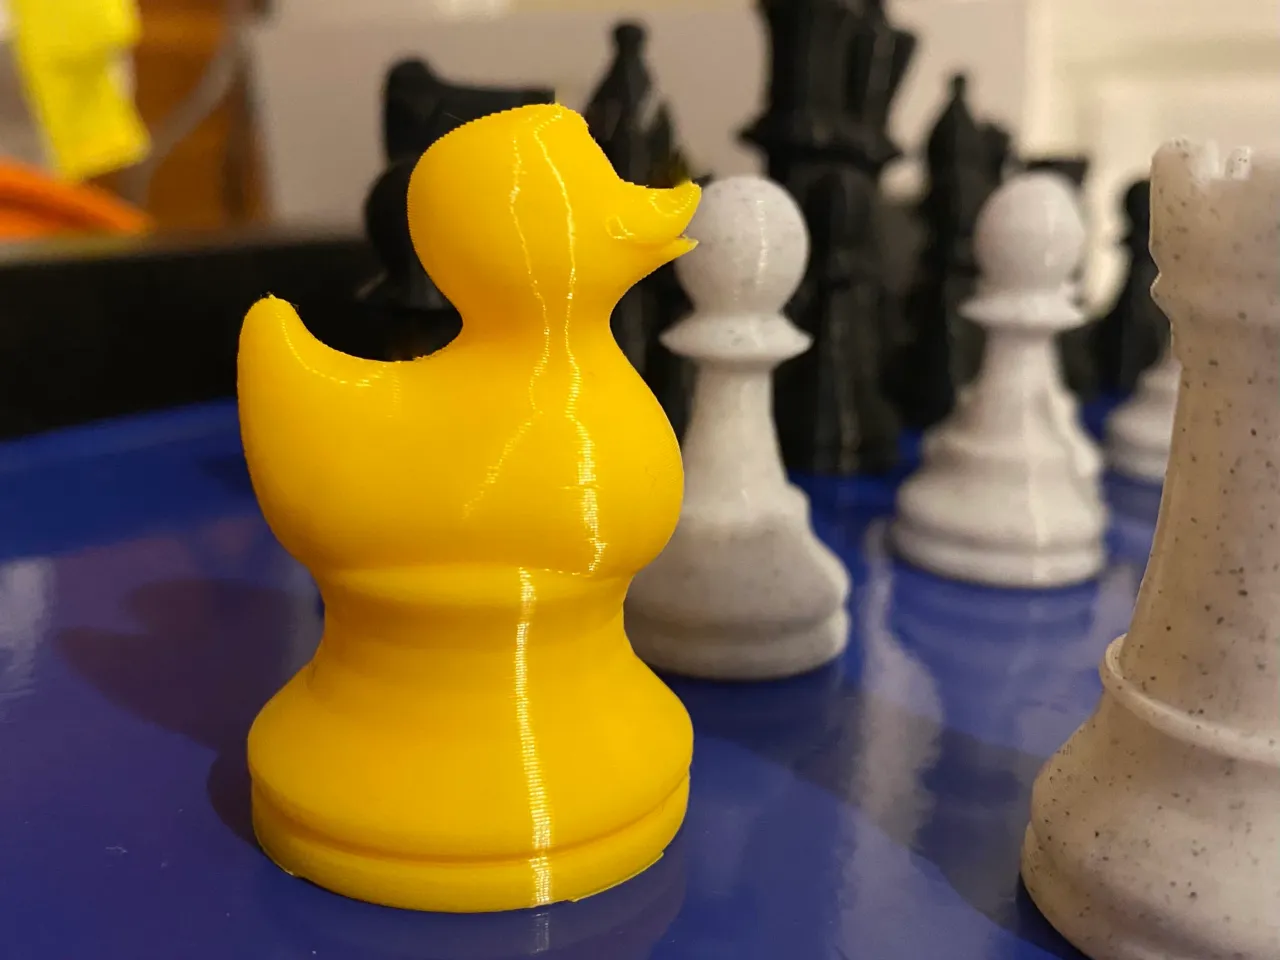 Duck Chess Piece by osbock, Download free STL model